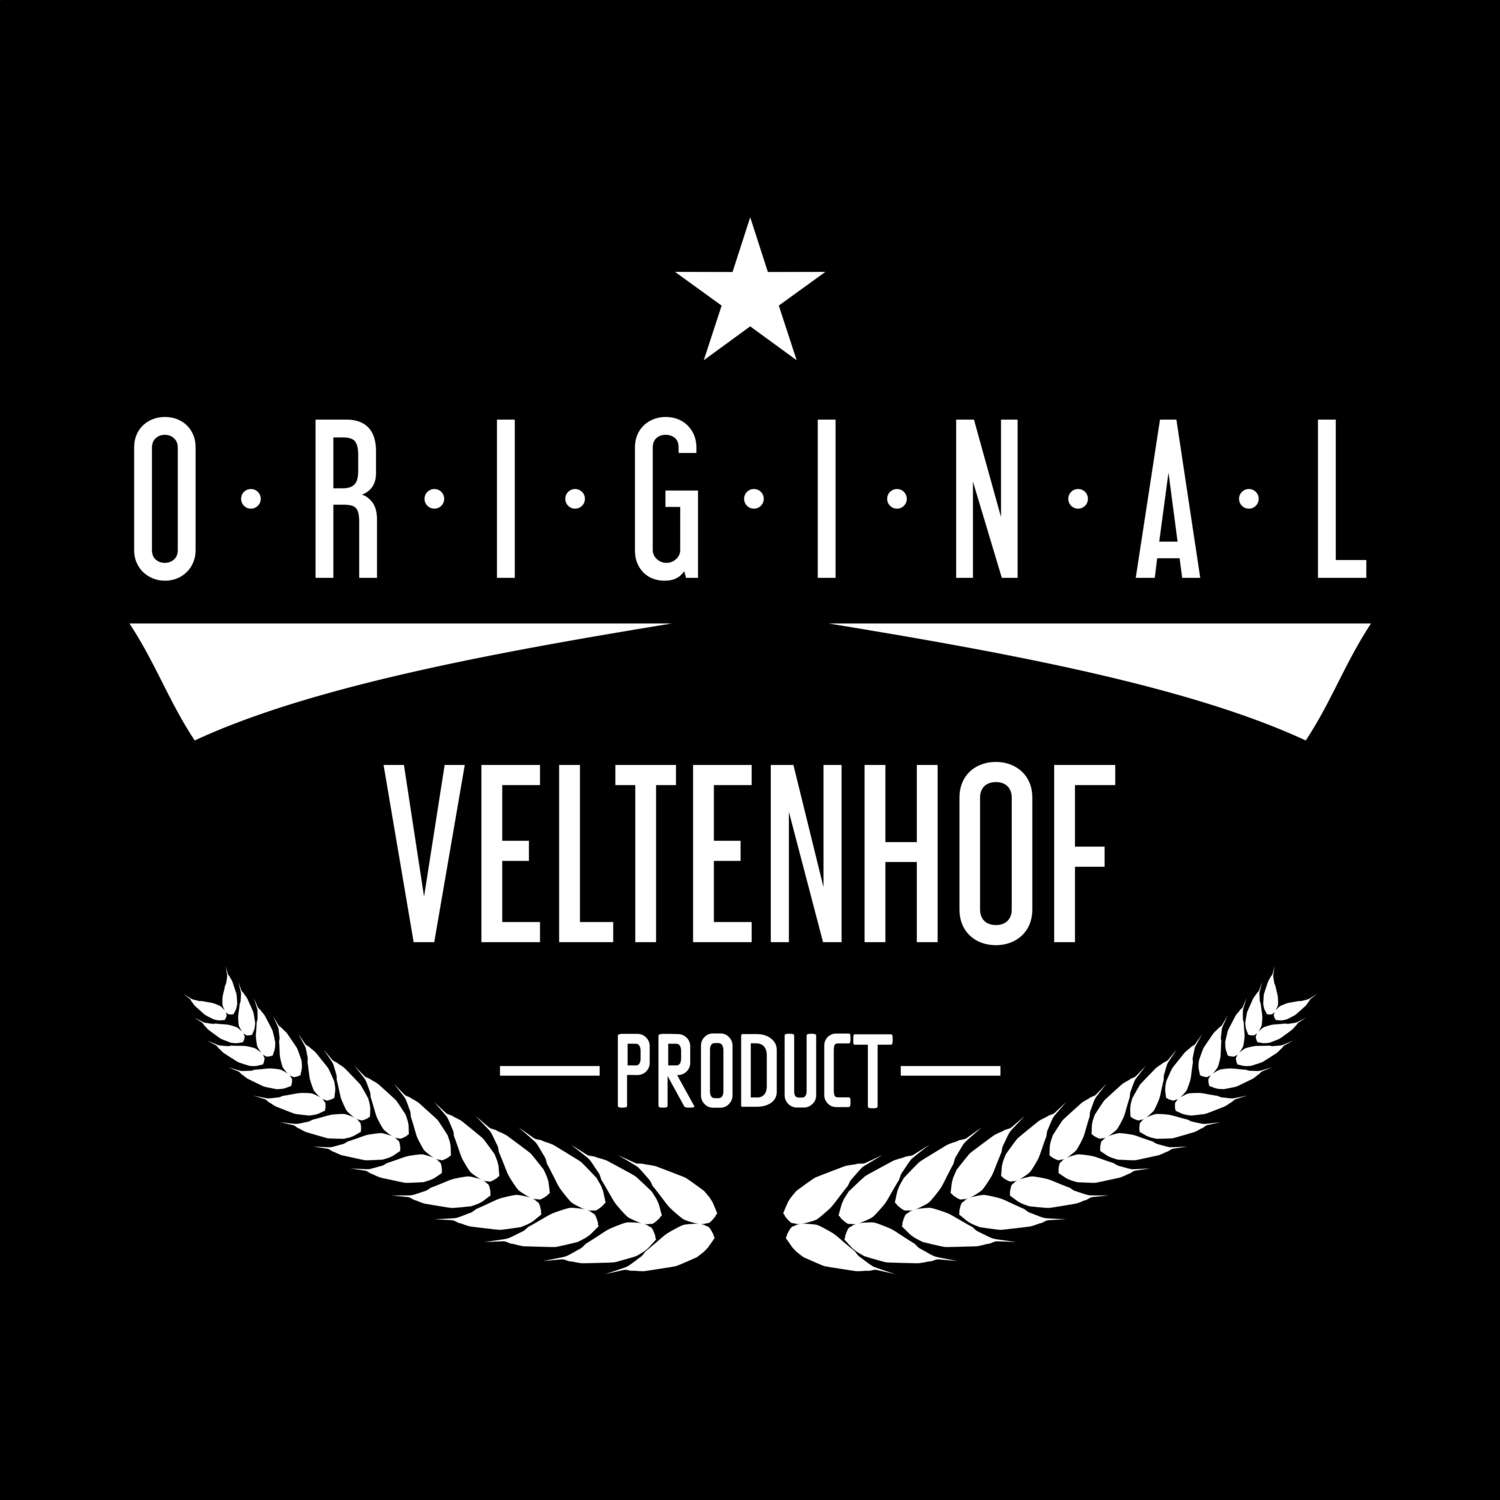 Veltenhof T-Shirt »Original Product«